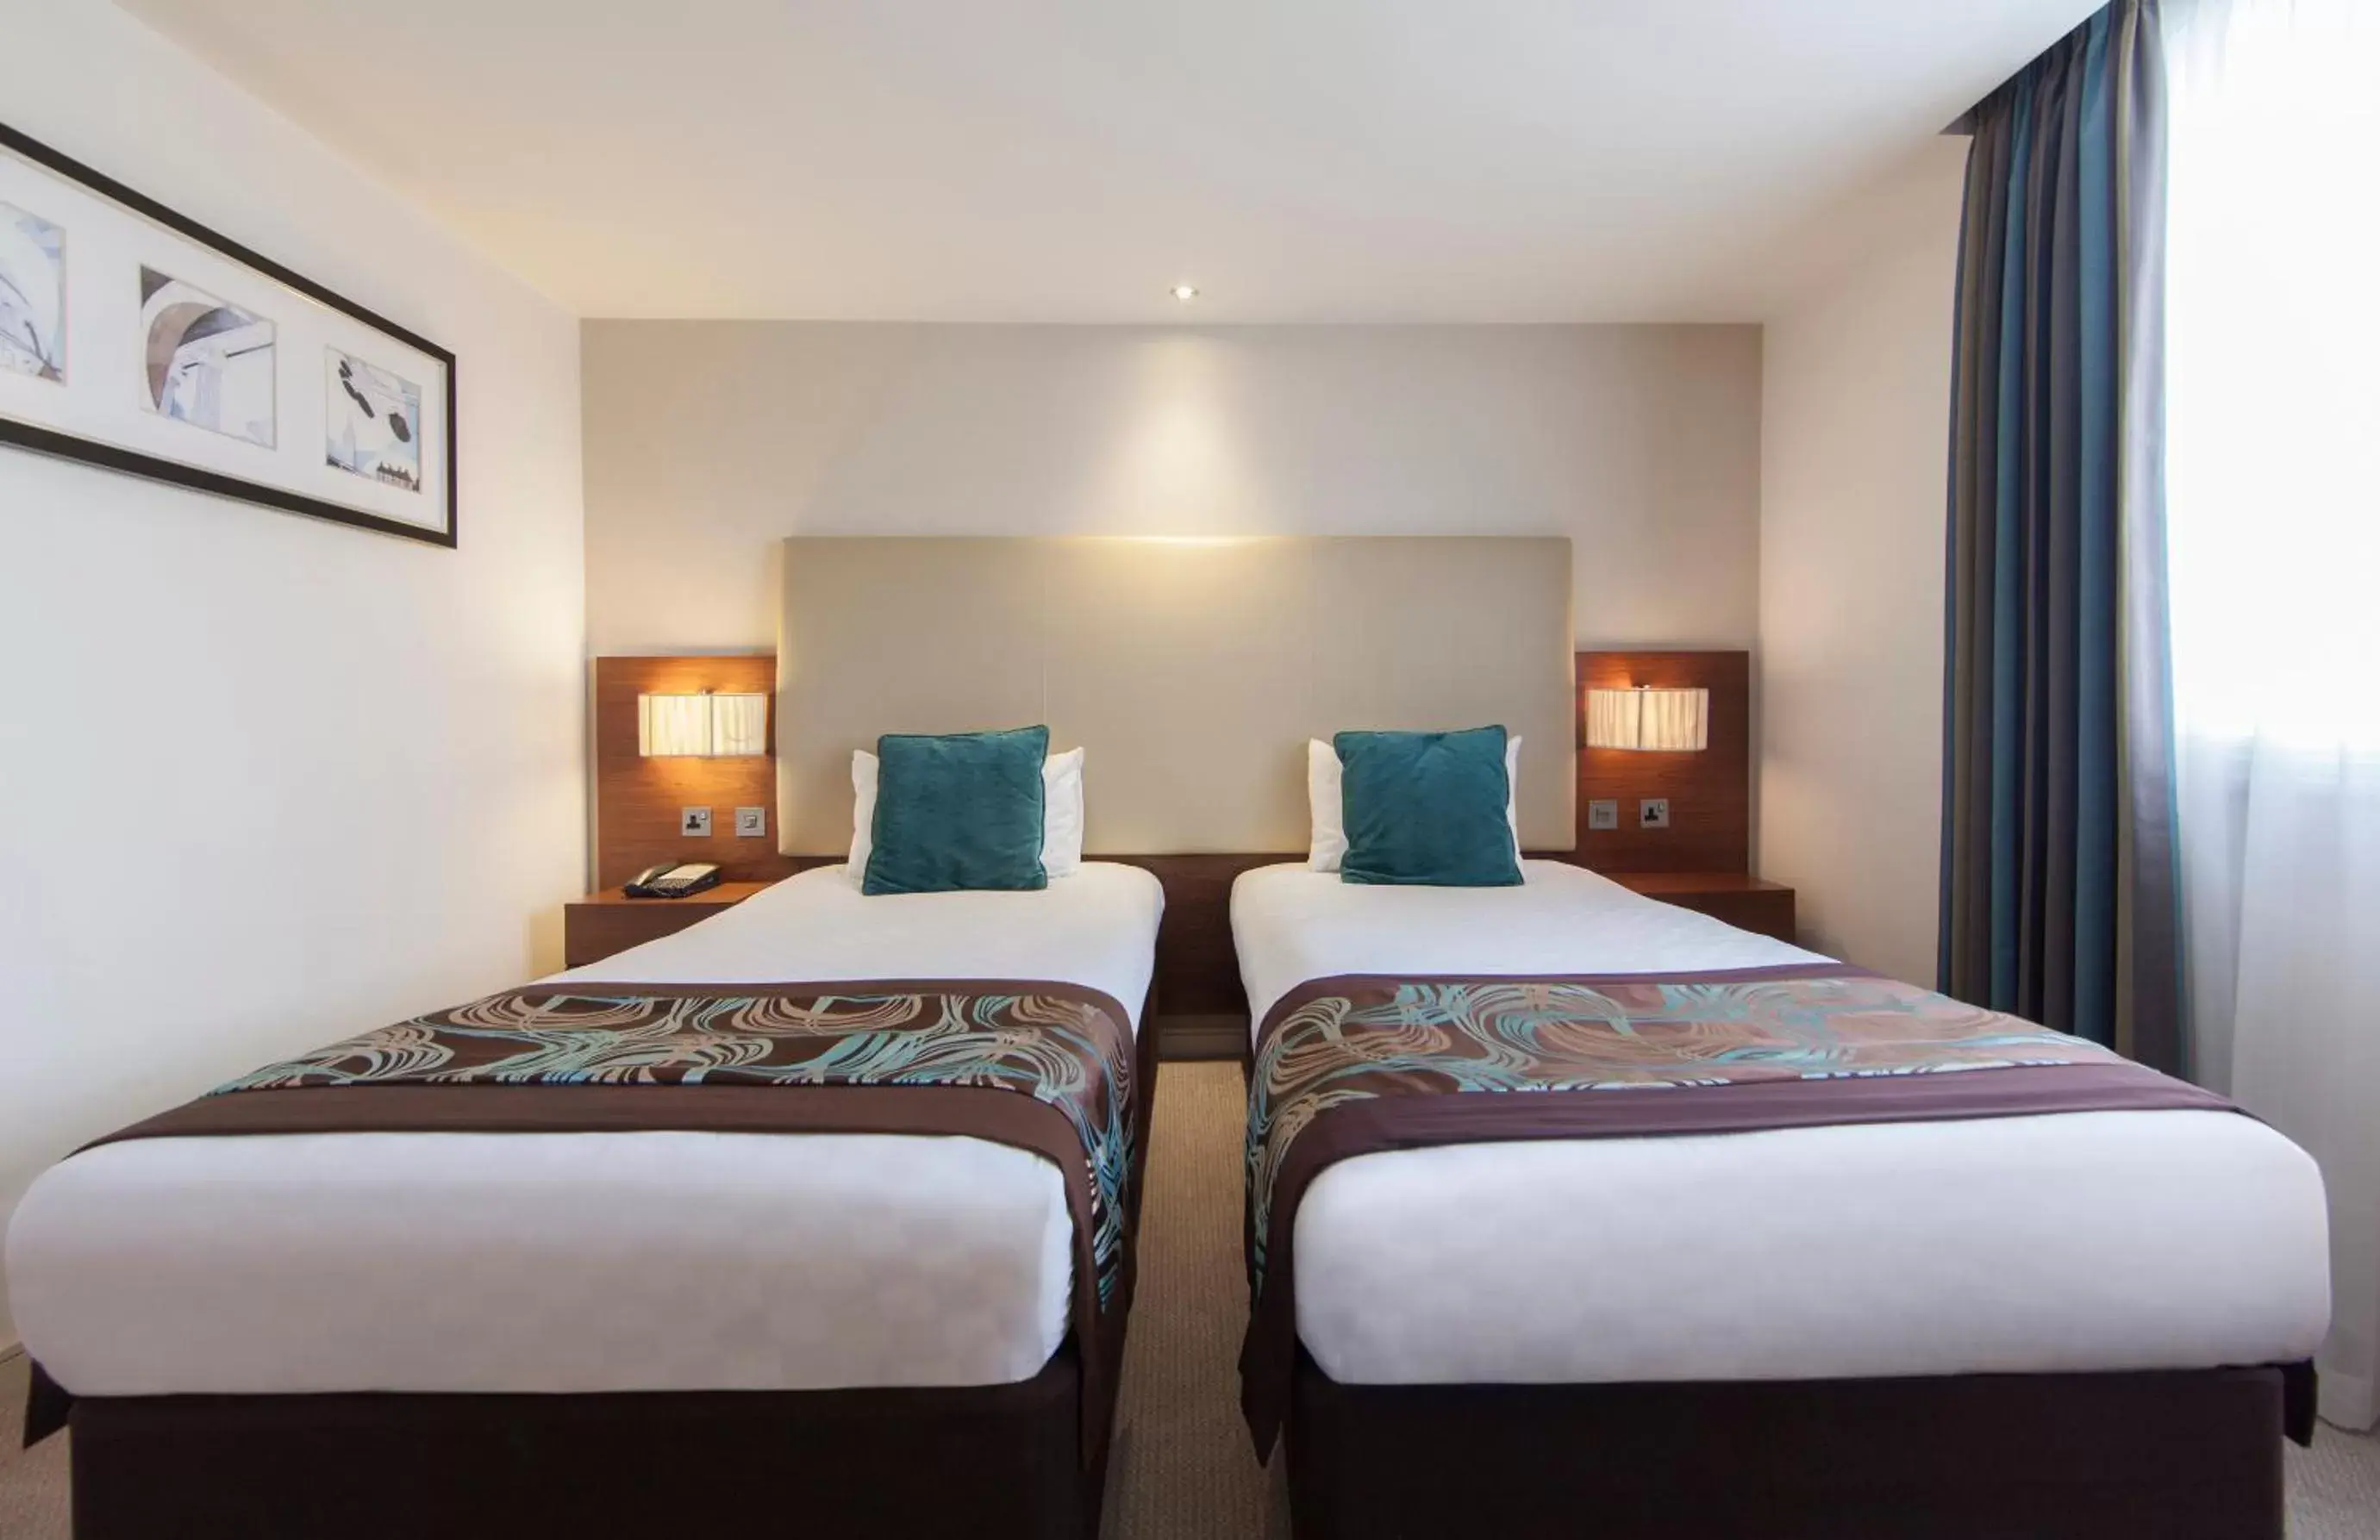 Bed, Room Photo in Thistle Trafalgar Square